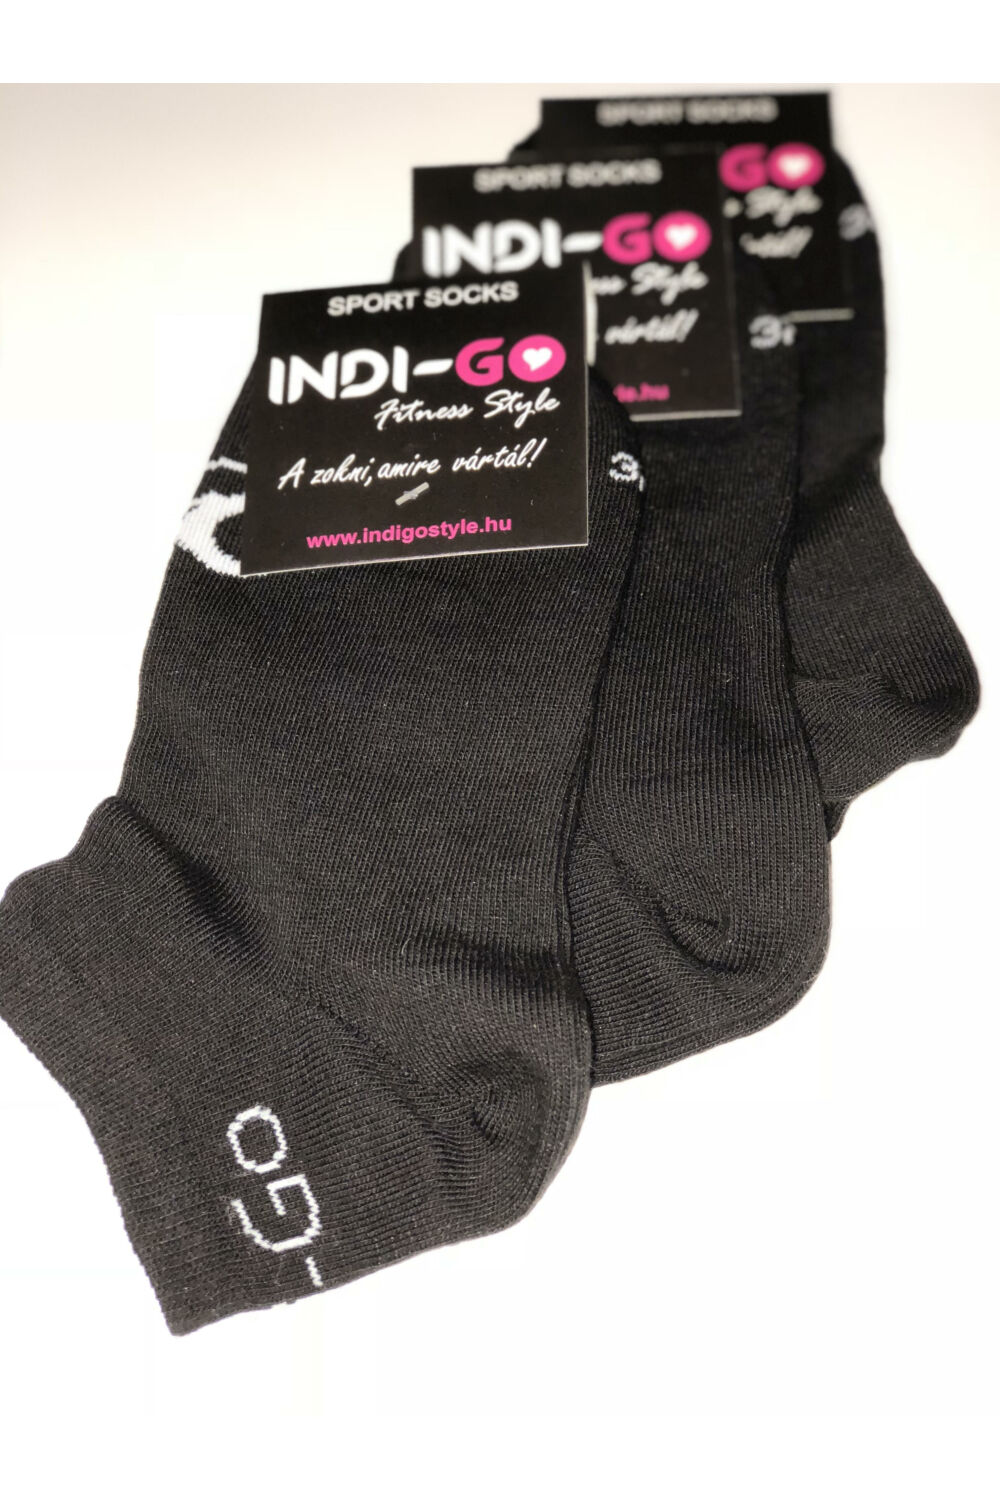 Indigo Sport zokni, fekete-pink